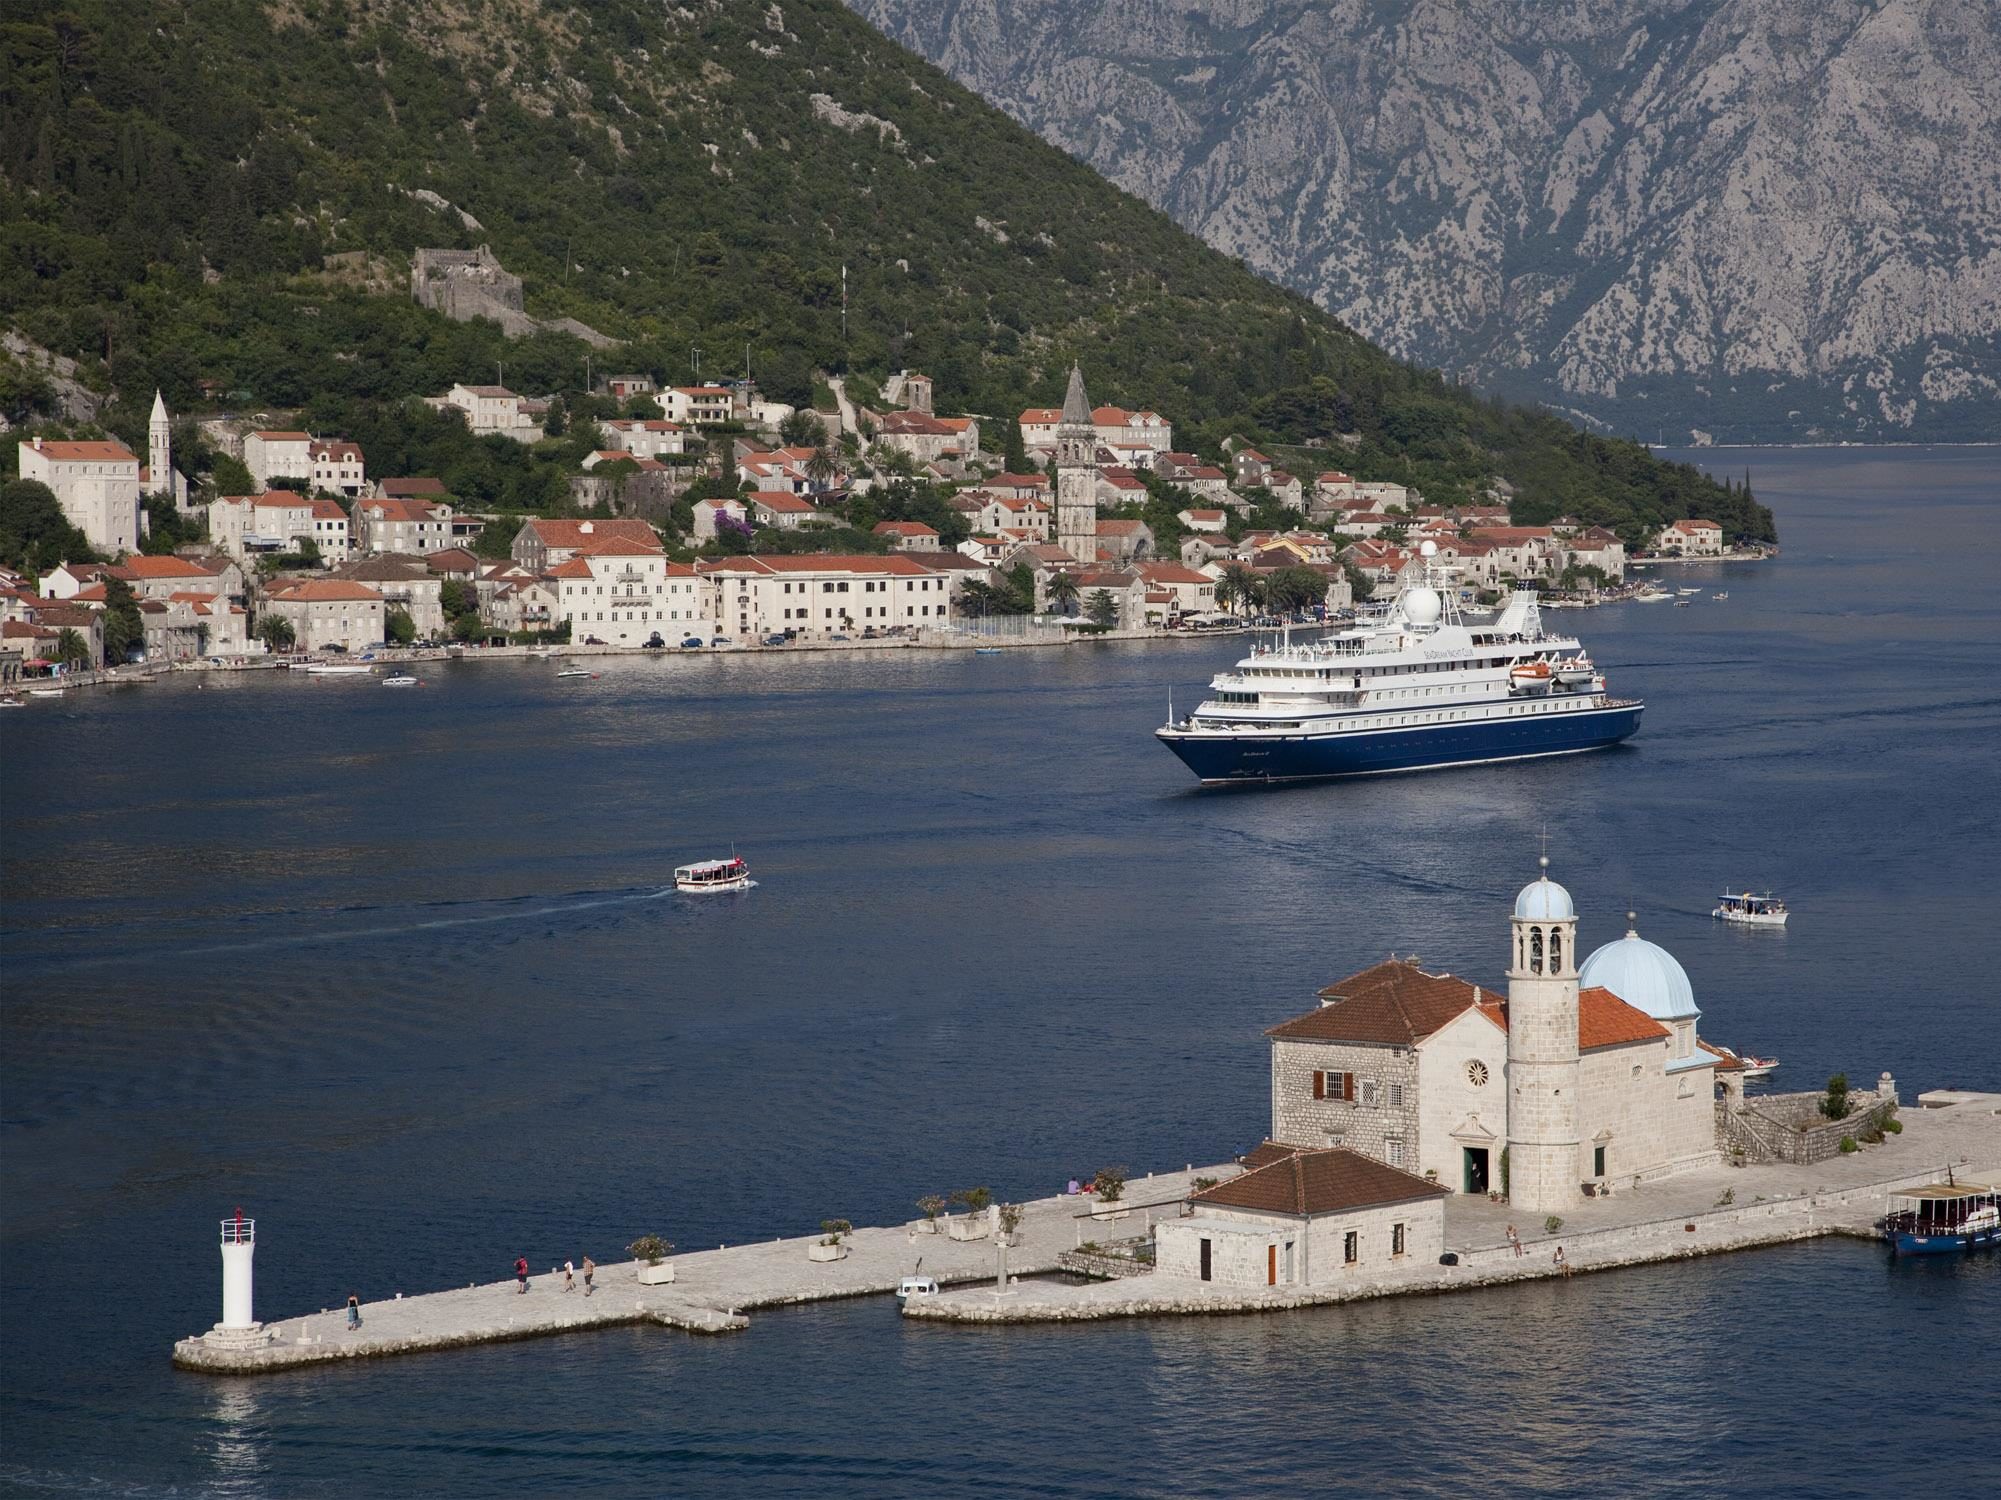 Luxury yacht entering the harbor at Kotor, Croatia.